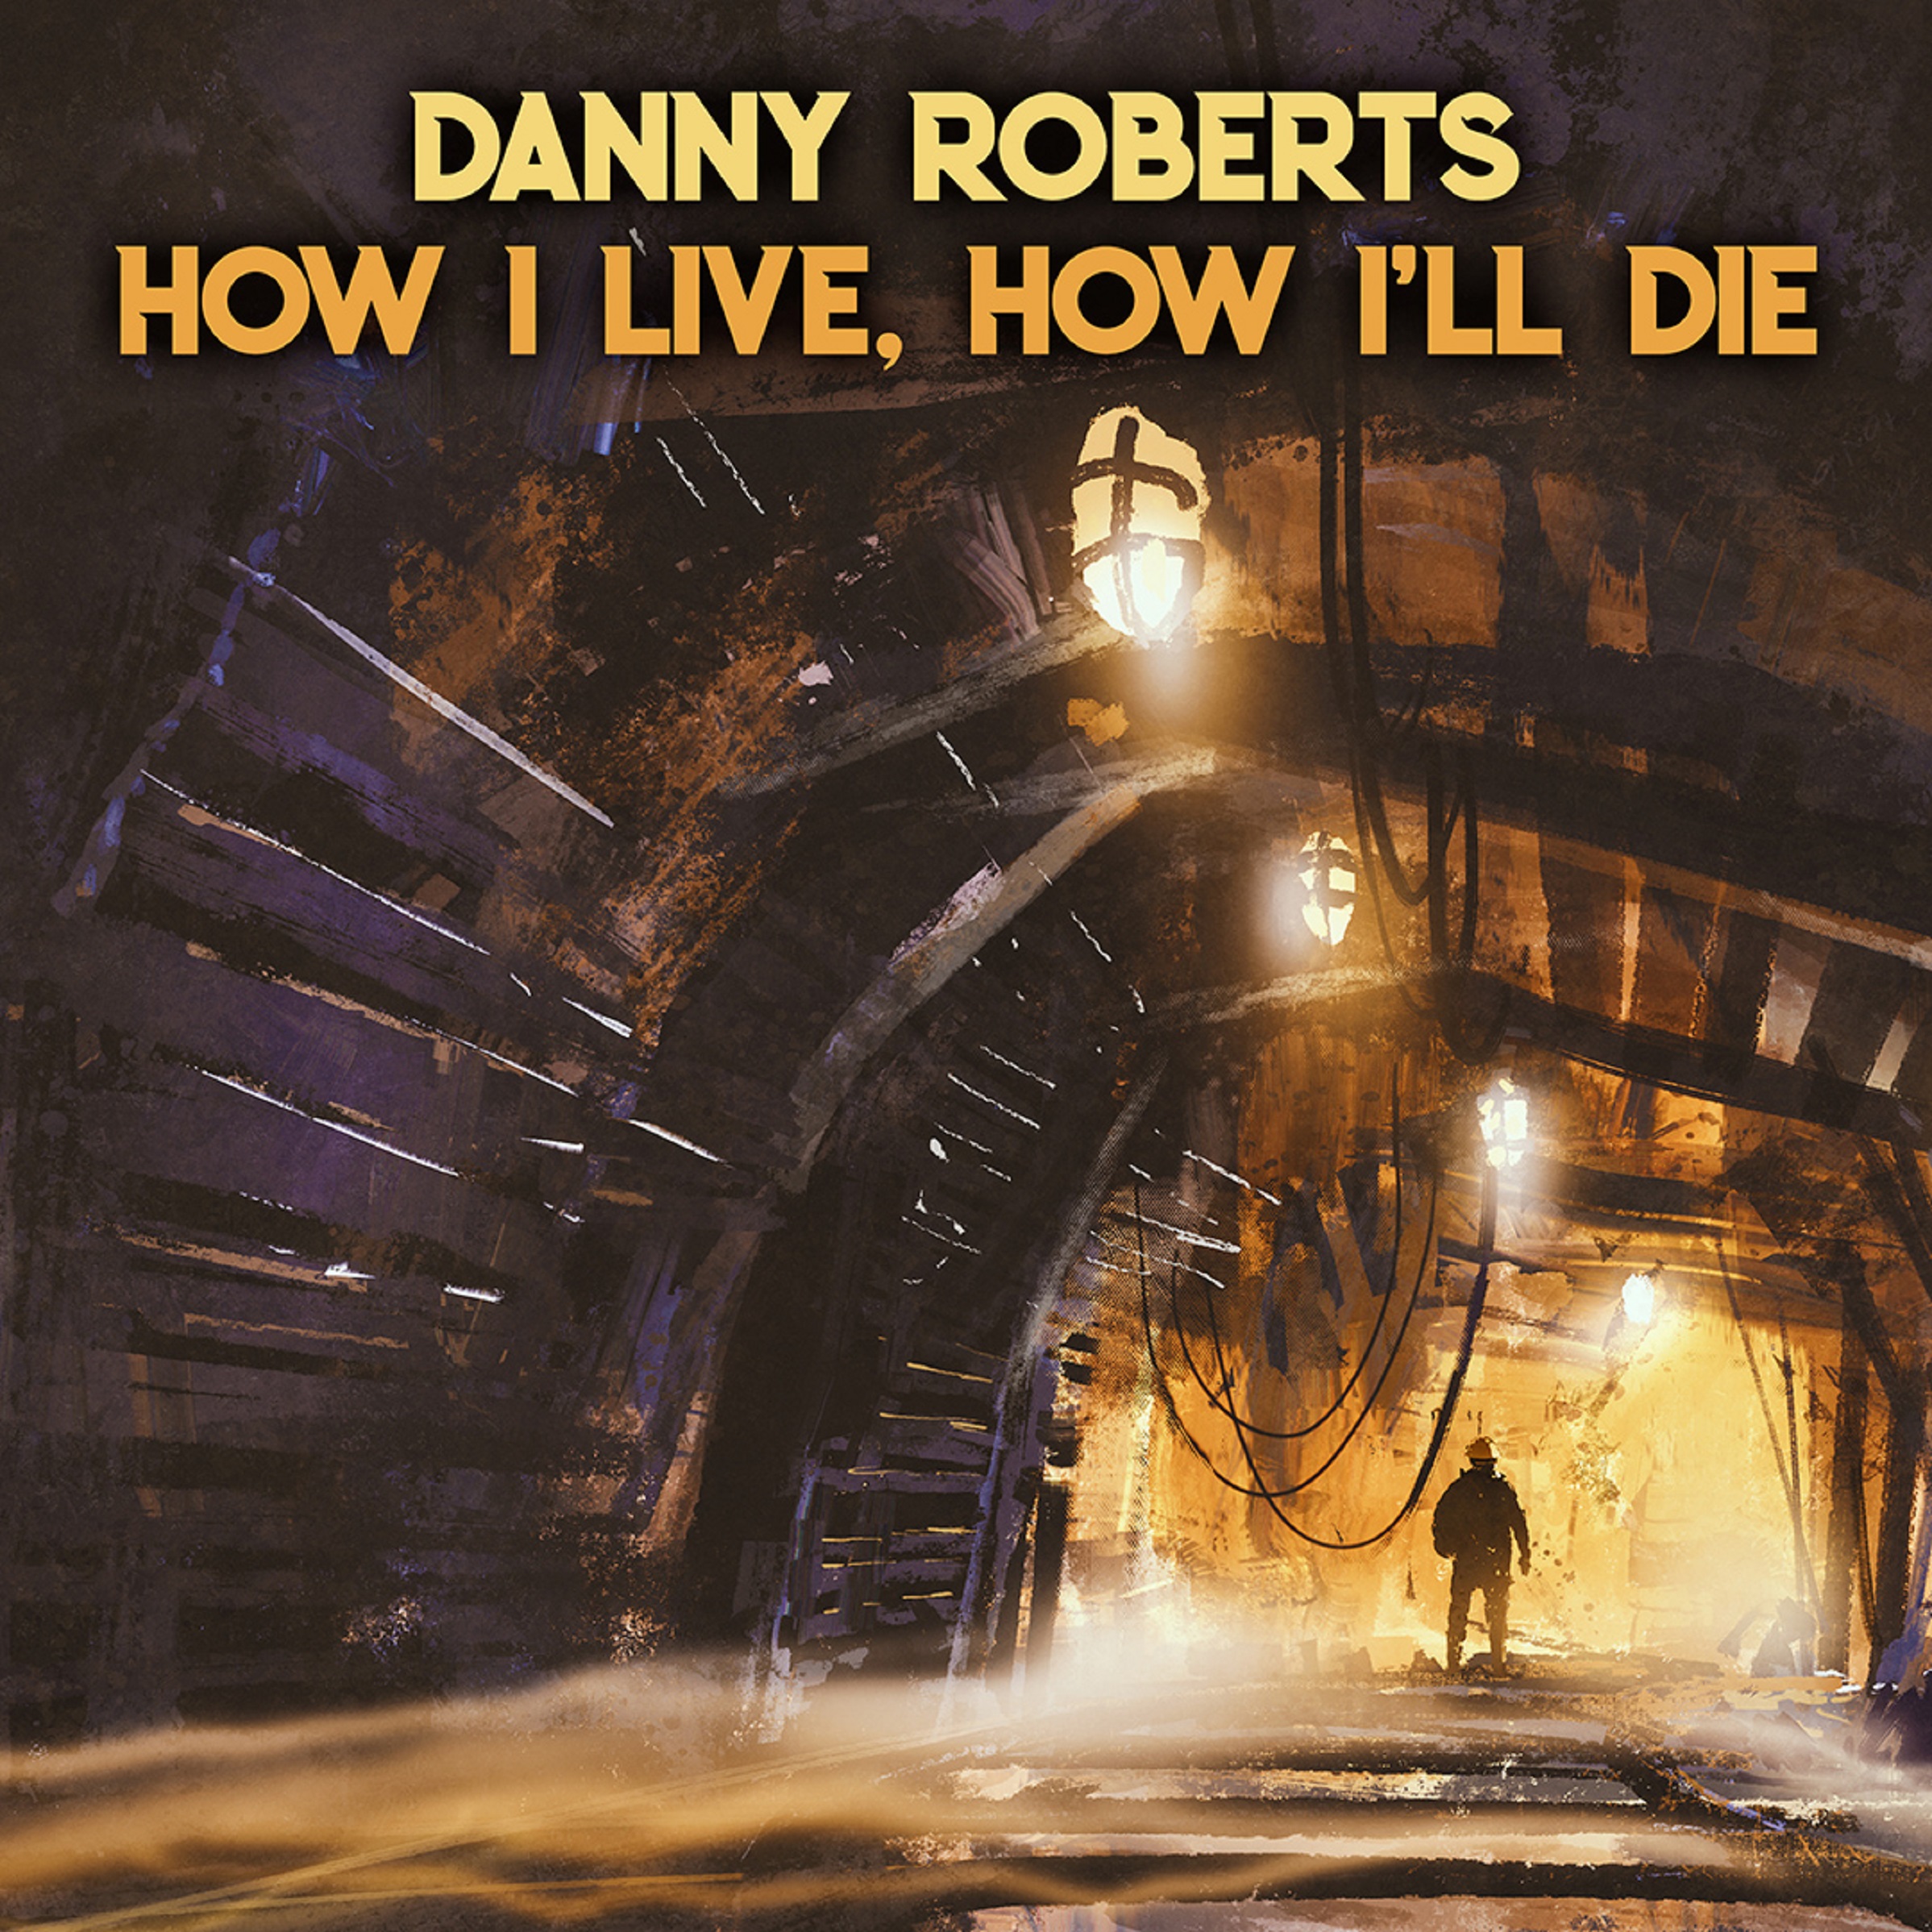 Danny Roberts’ “How I Live, How I’ll Die” tells a coal mining tale